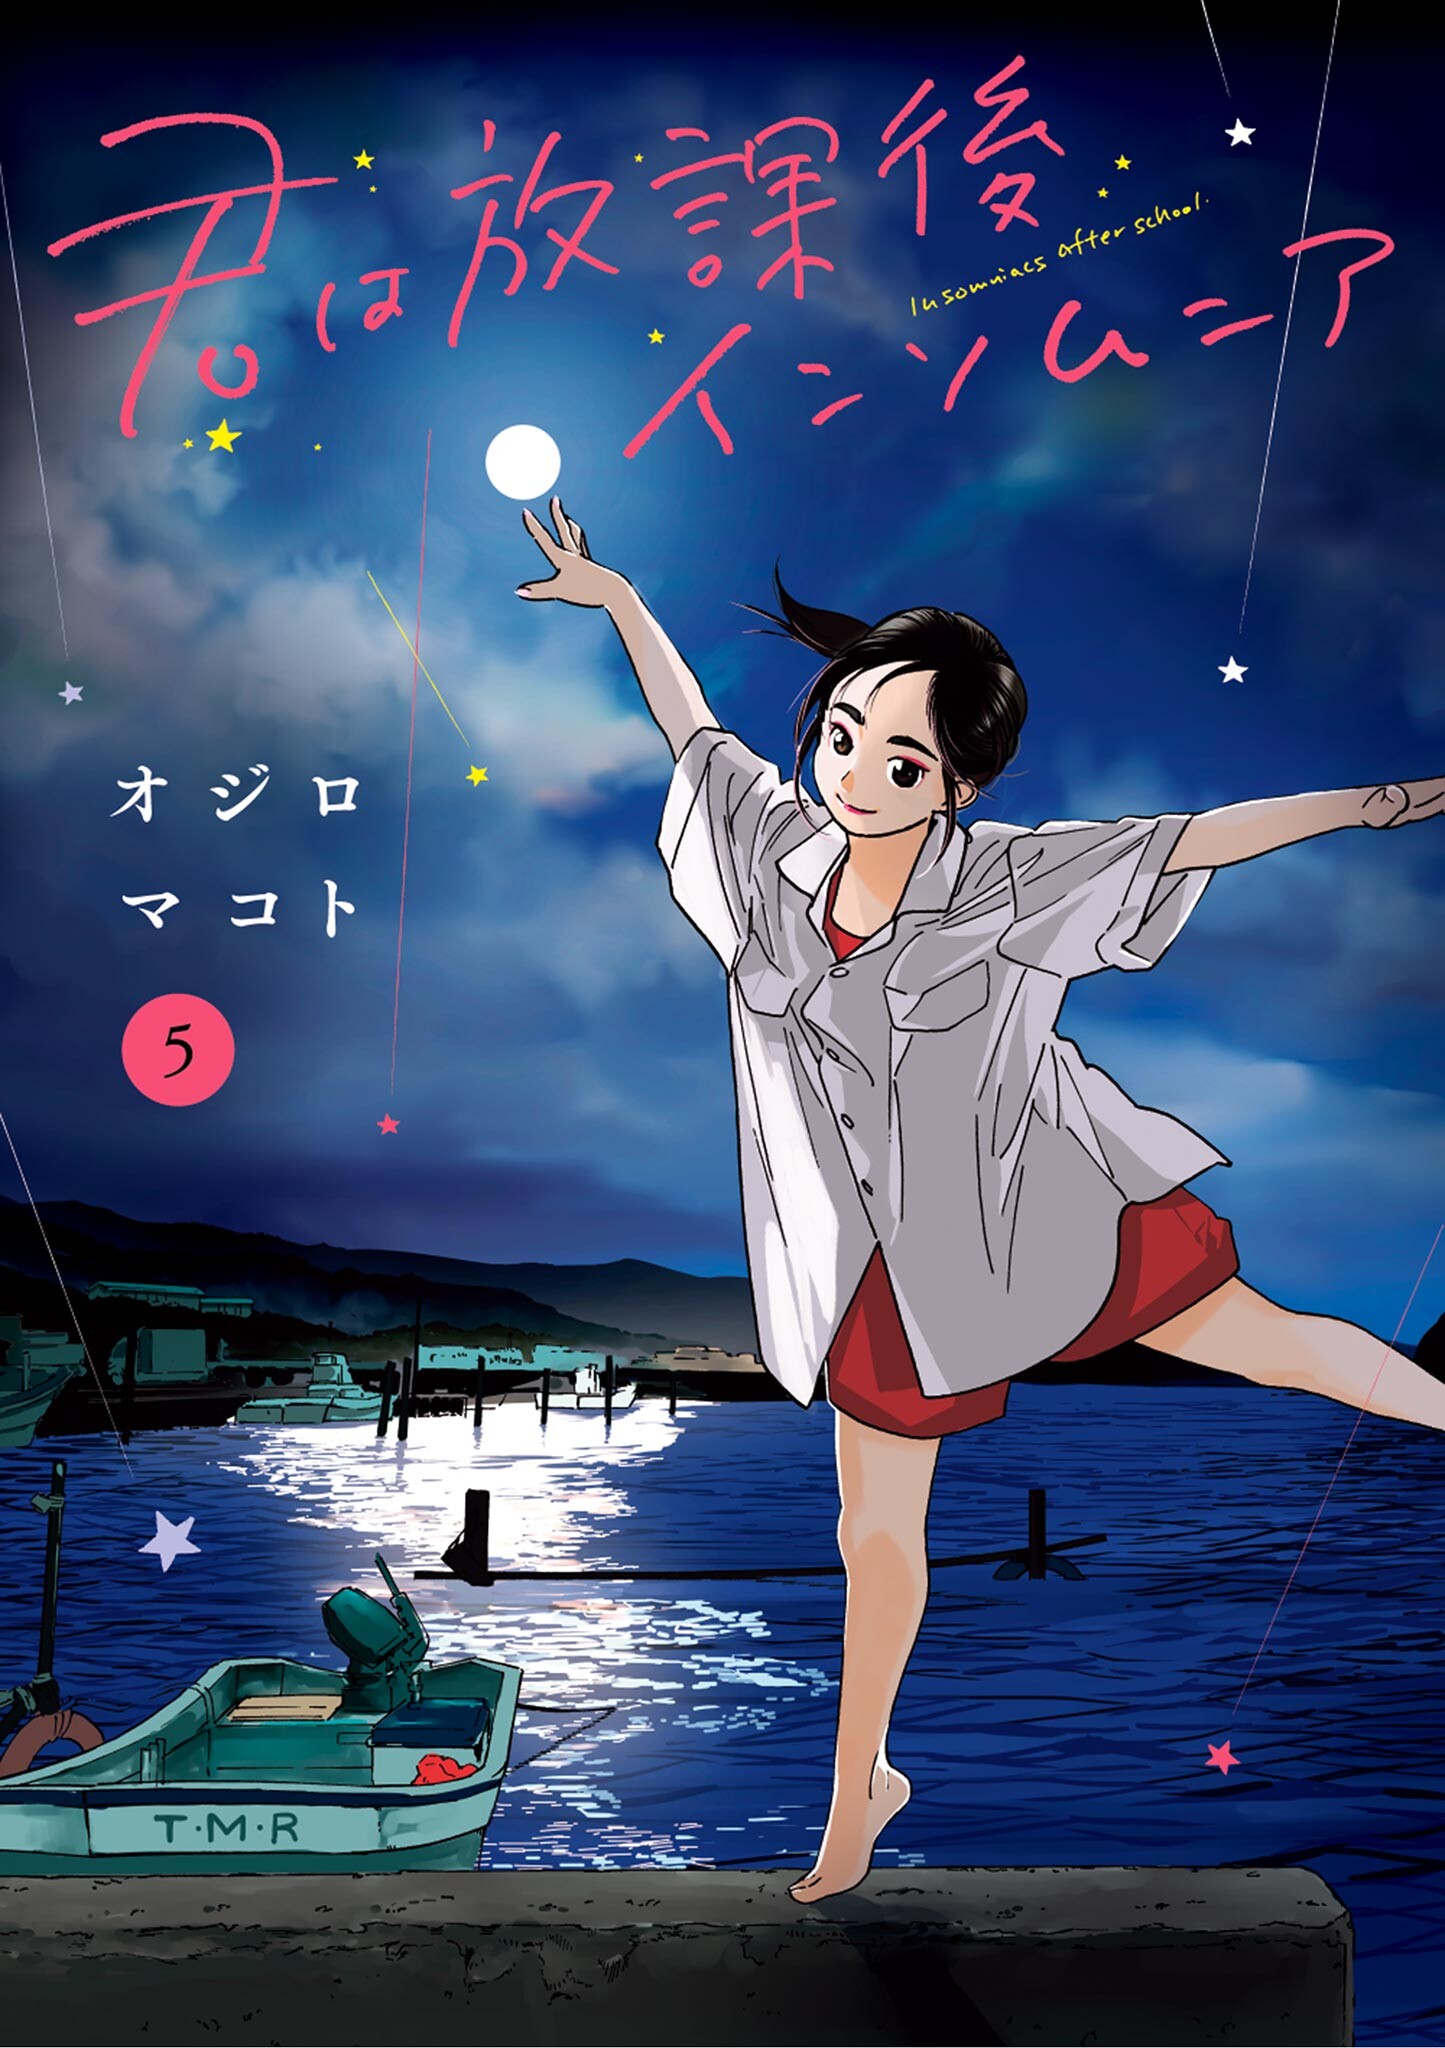 𝐃𝐚𝐢𝐥𝐲 𝐌𝐚𝐧𝐠𝐚 - Kimi wa Houkago Insomnia By Ojiro, Makoto Ongoing  (2019) - (+27 Ch, 3 Vol) Genres: #Seinen, #SliceOfLife, #Romance, #School